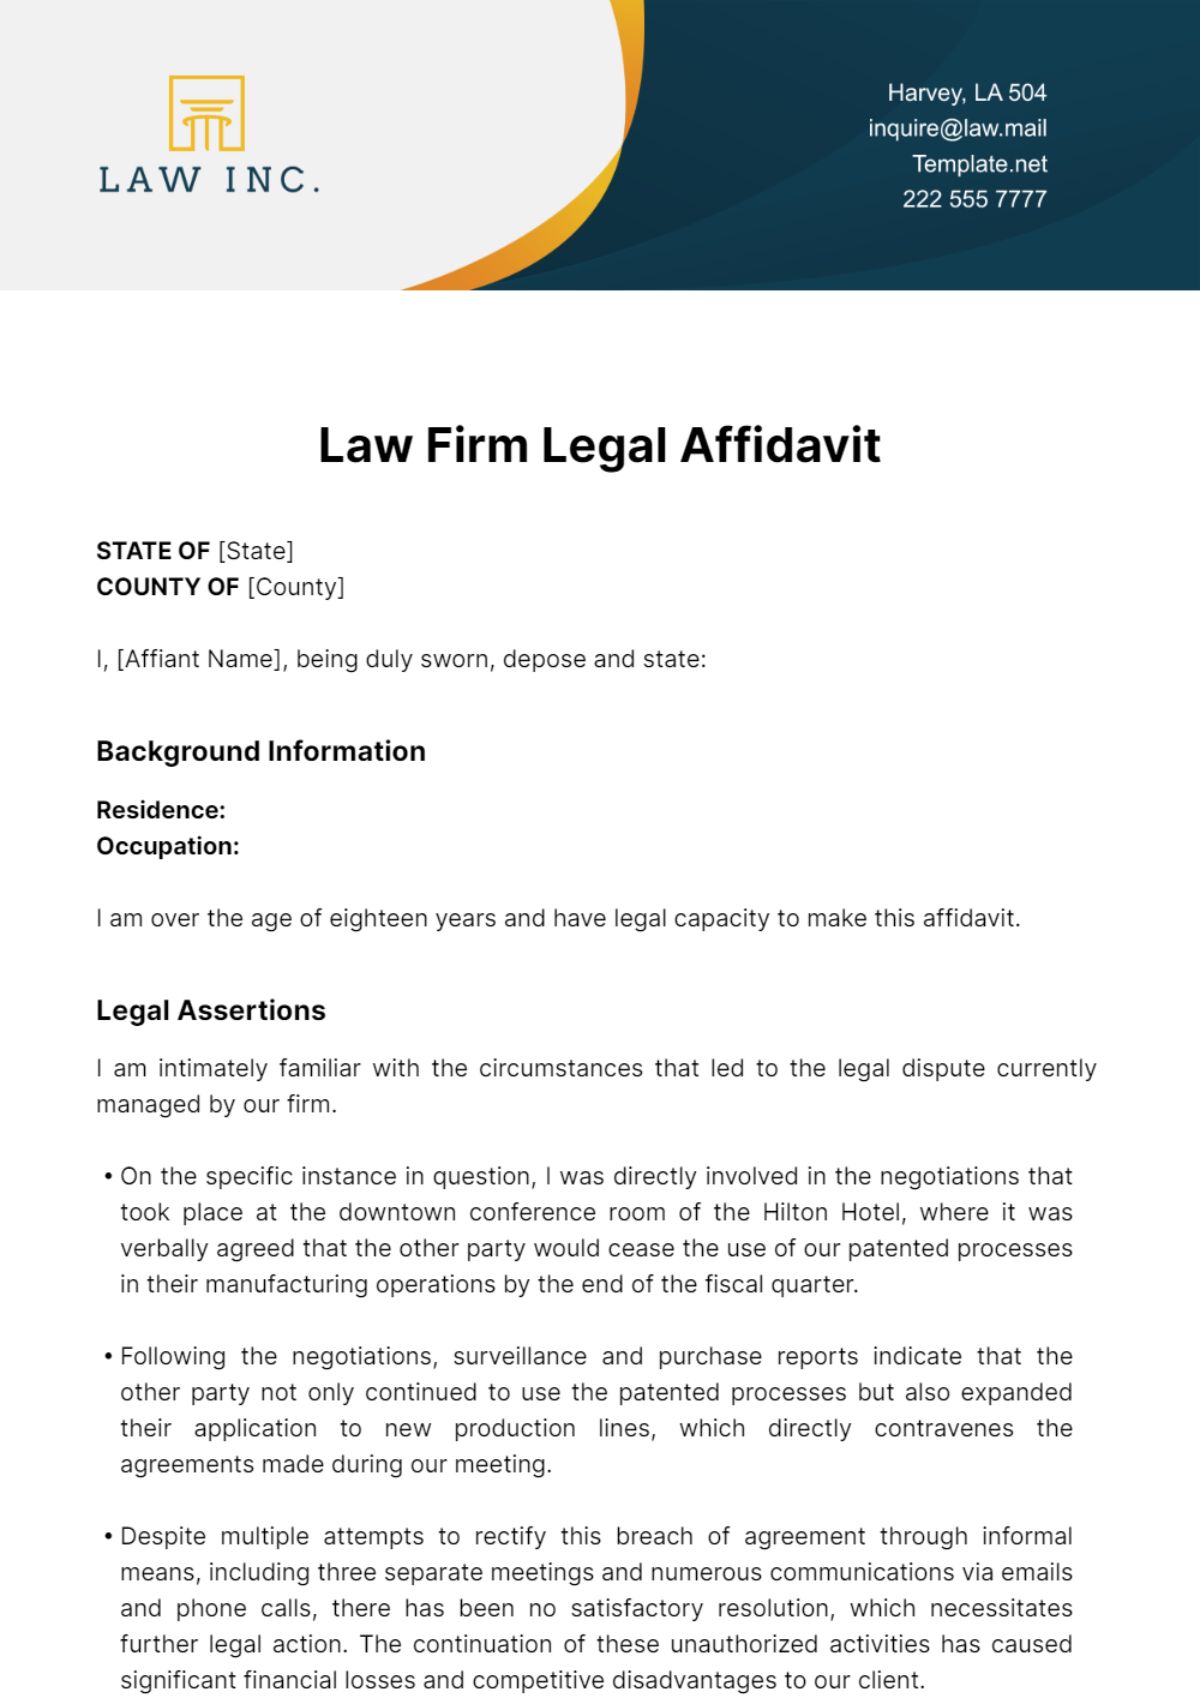 Law Firm Legal Affidavit Template